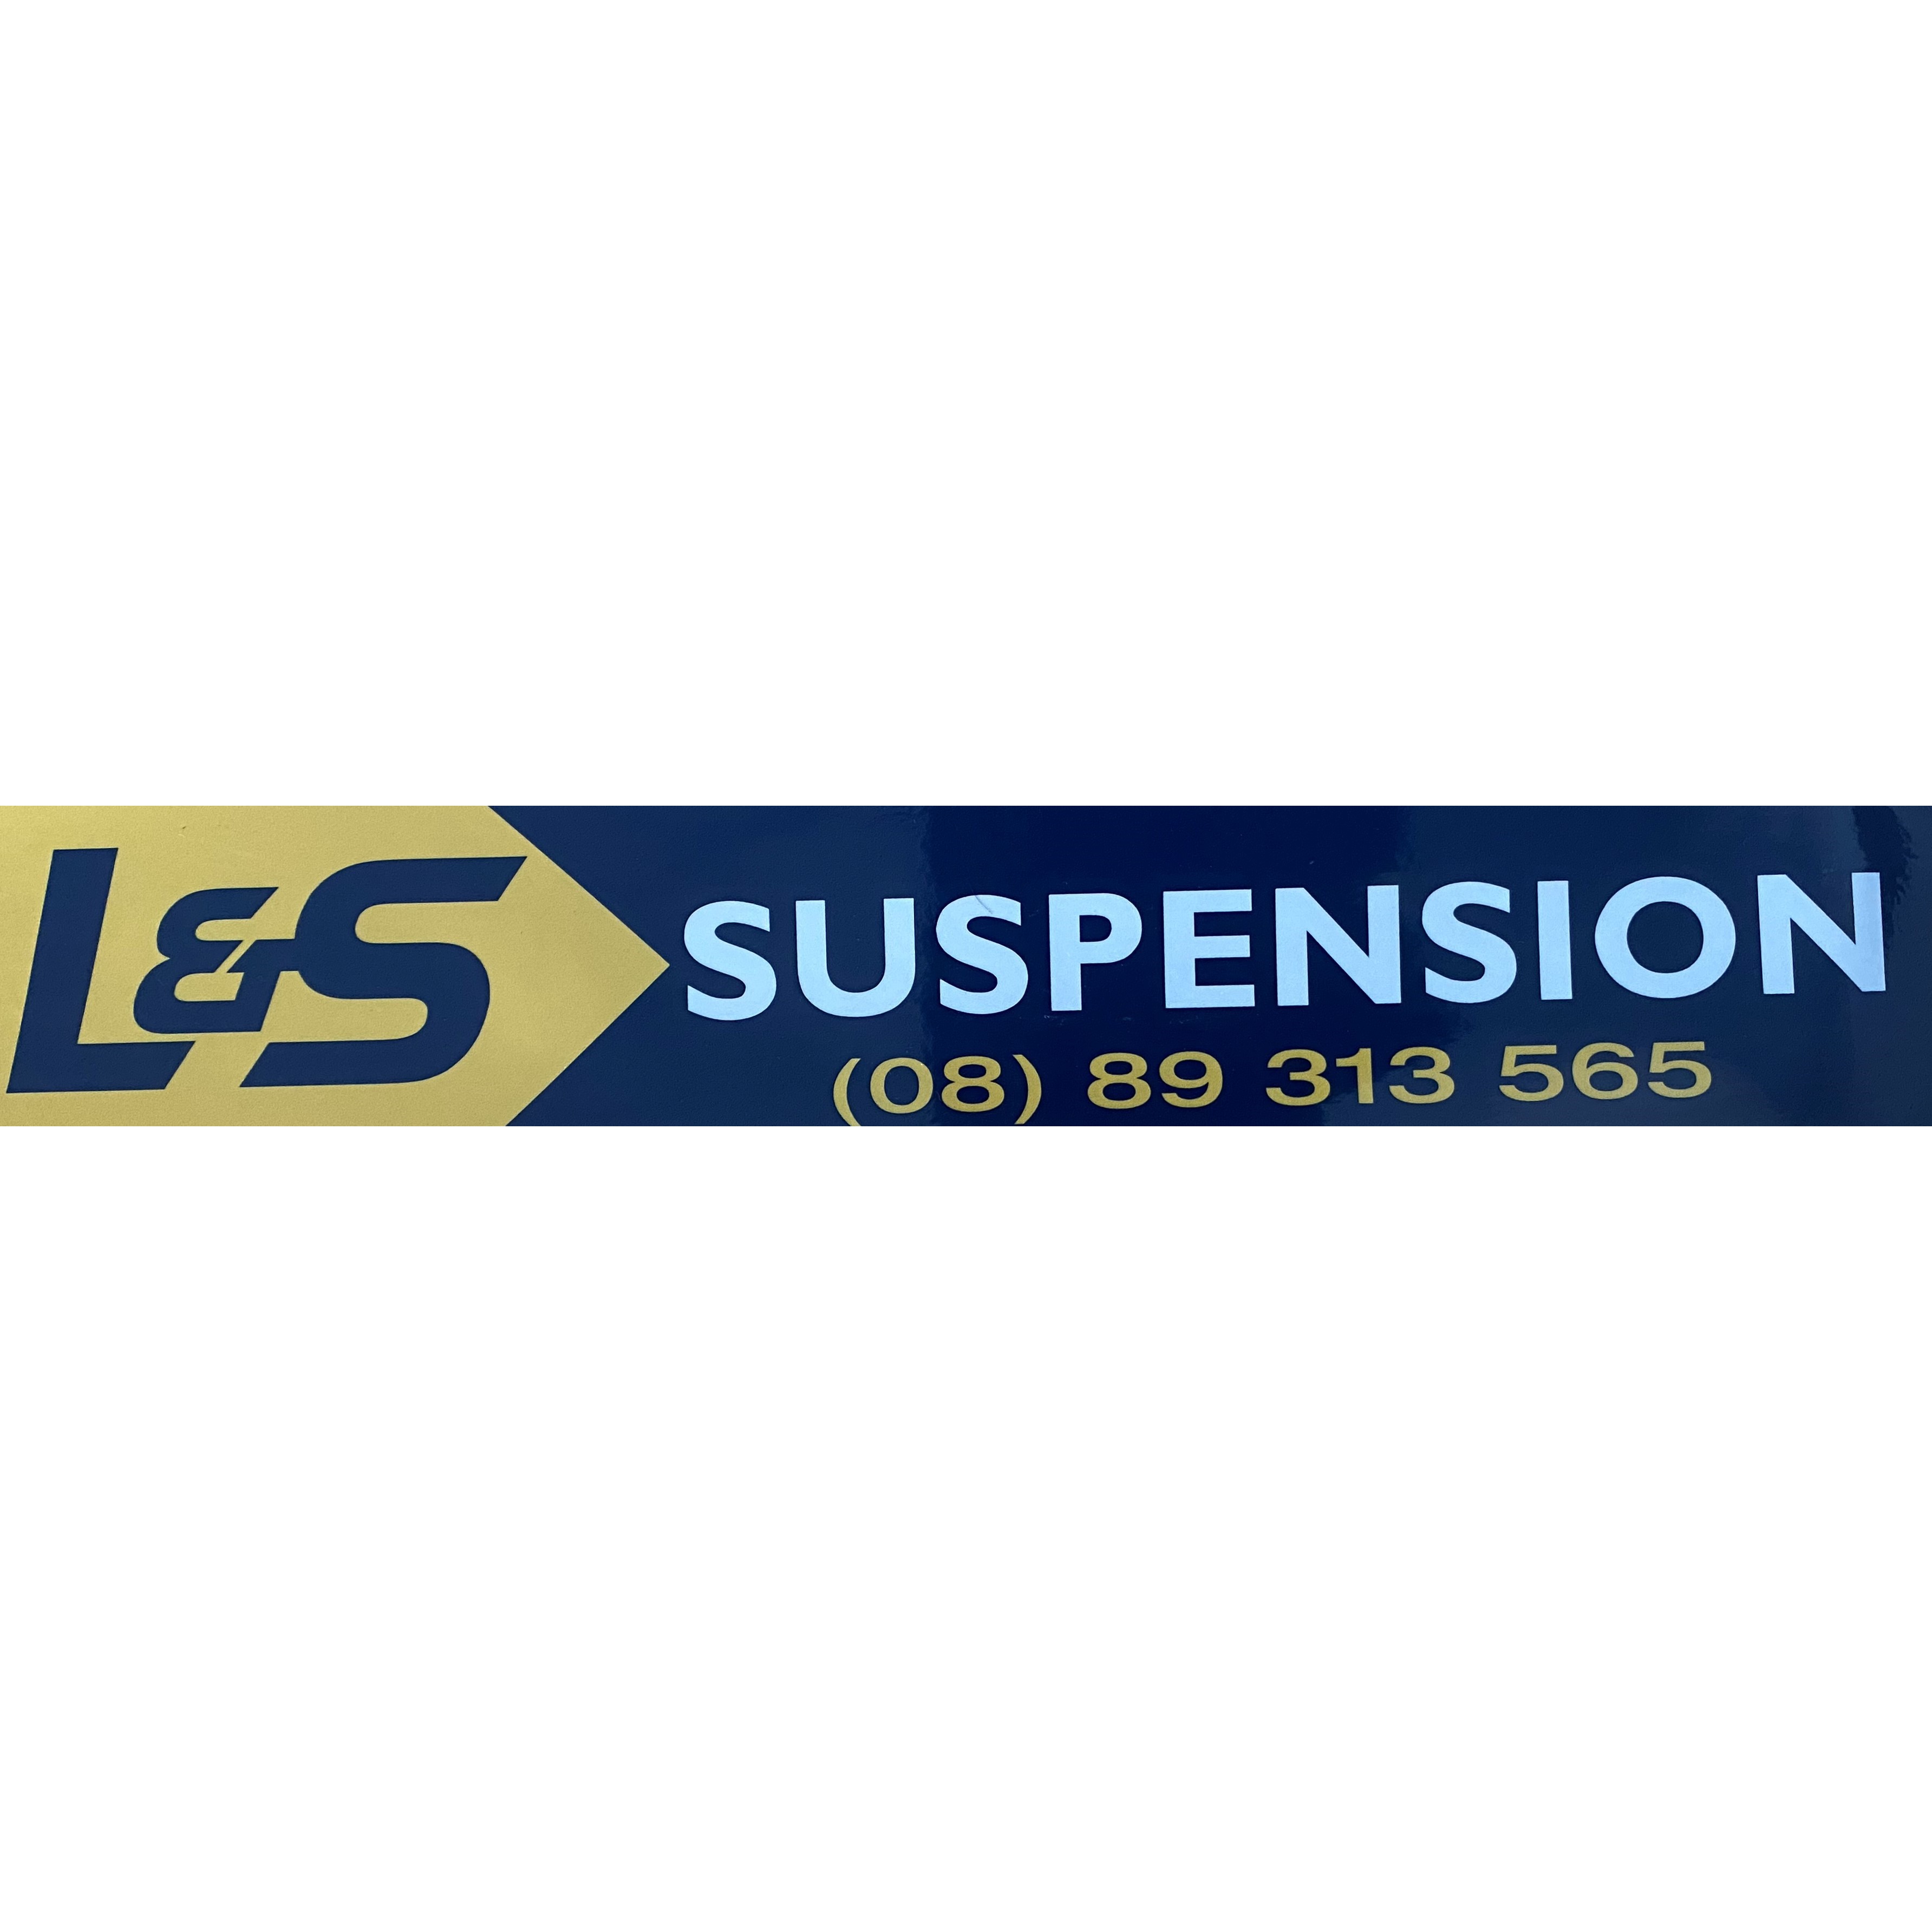 L & S Suspension - Berrimah, NT 0828 - (08) 8931 3565 | ShowMeLocal.com